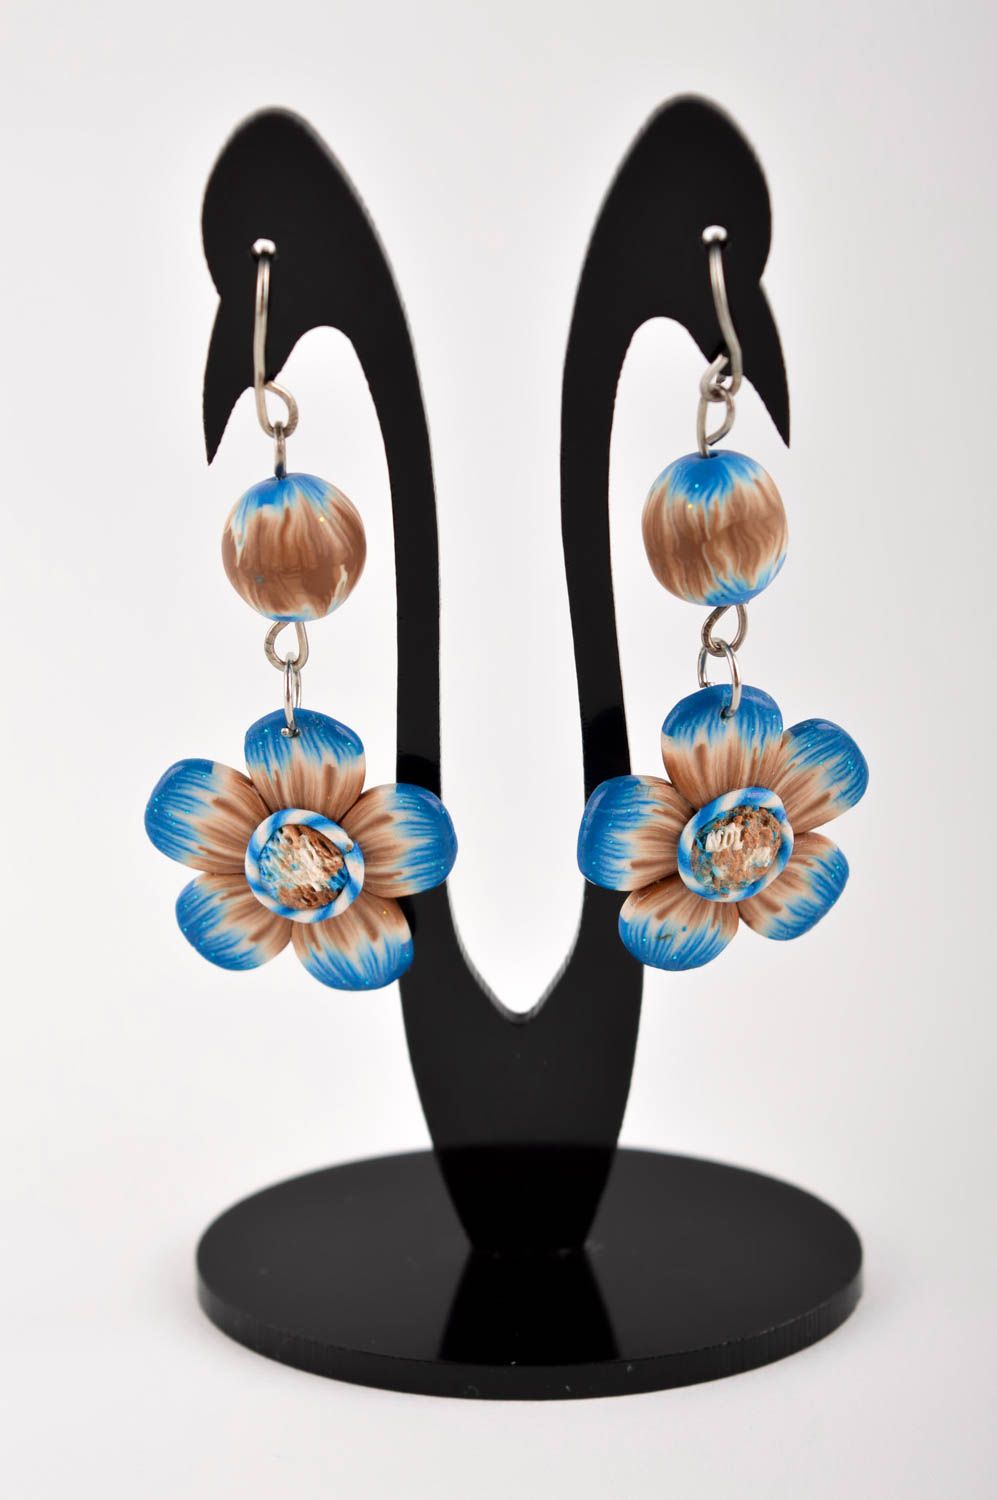 Unusual handmade plastic earrings artisan jewelry designs flower earrings photo 2